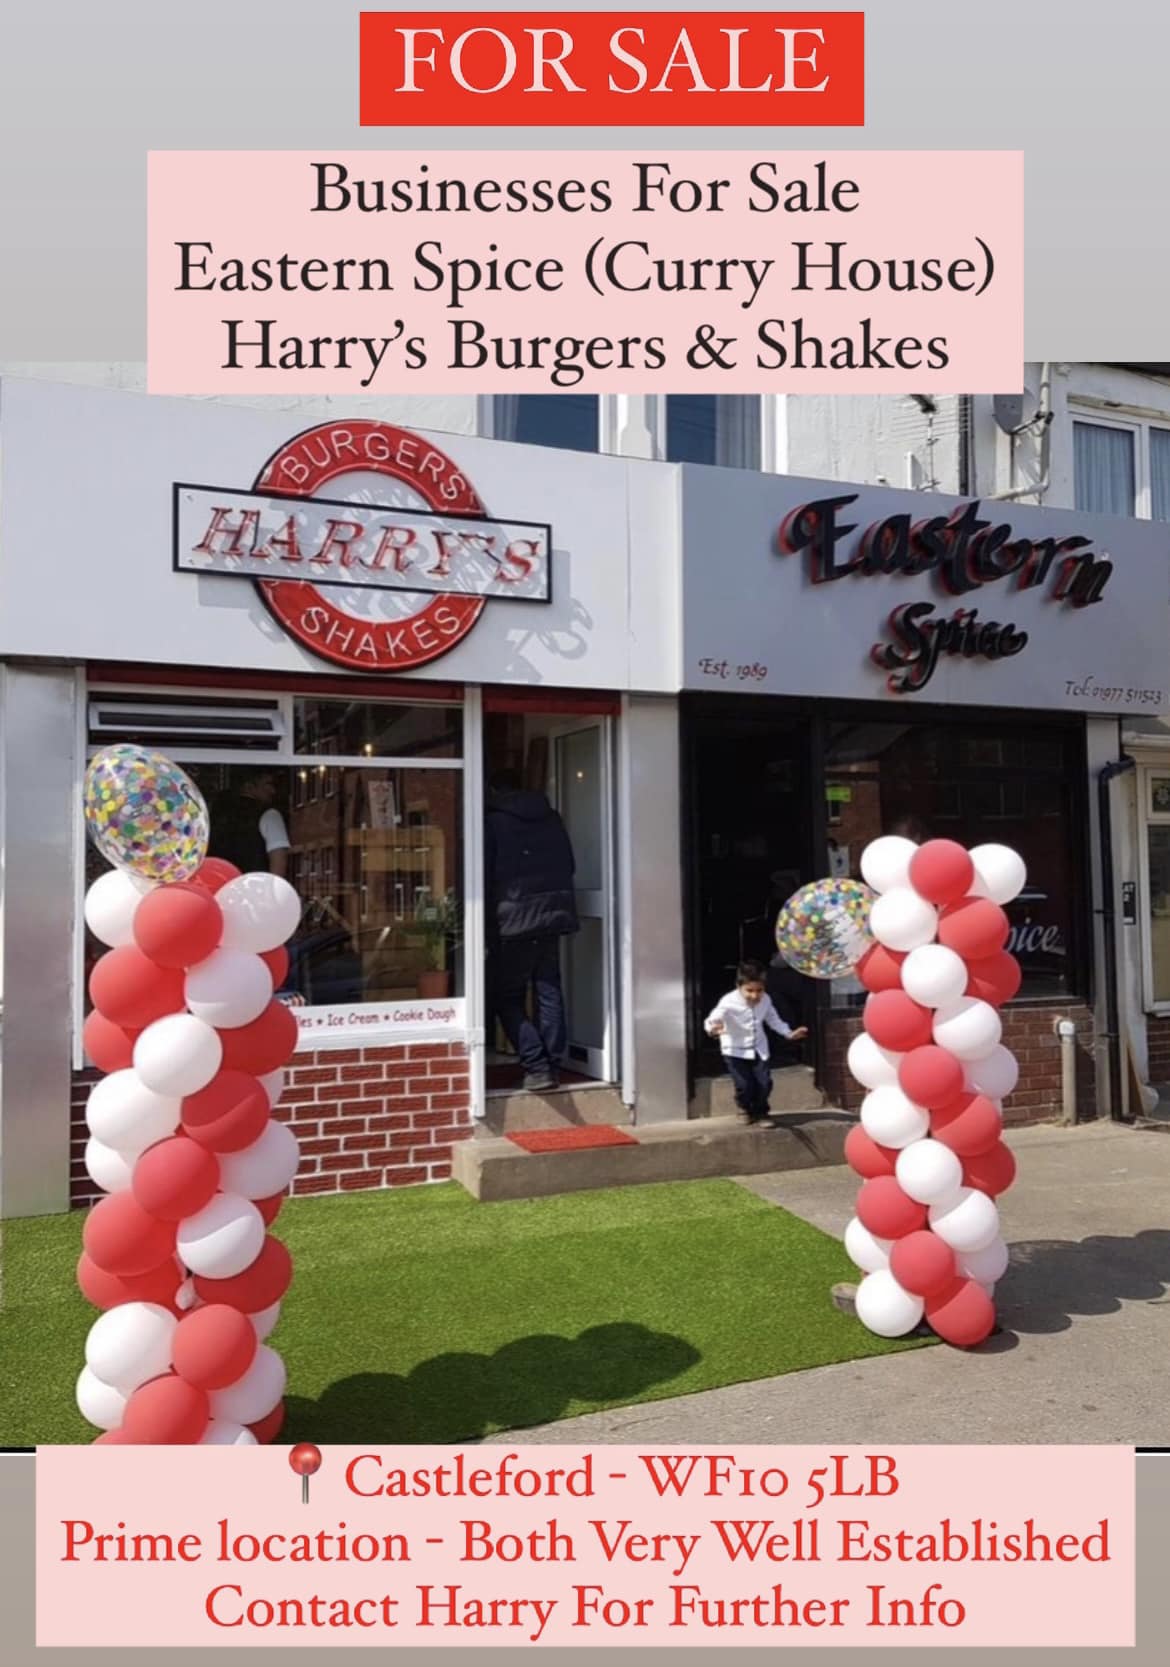 Harry's Burgers & Shakes